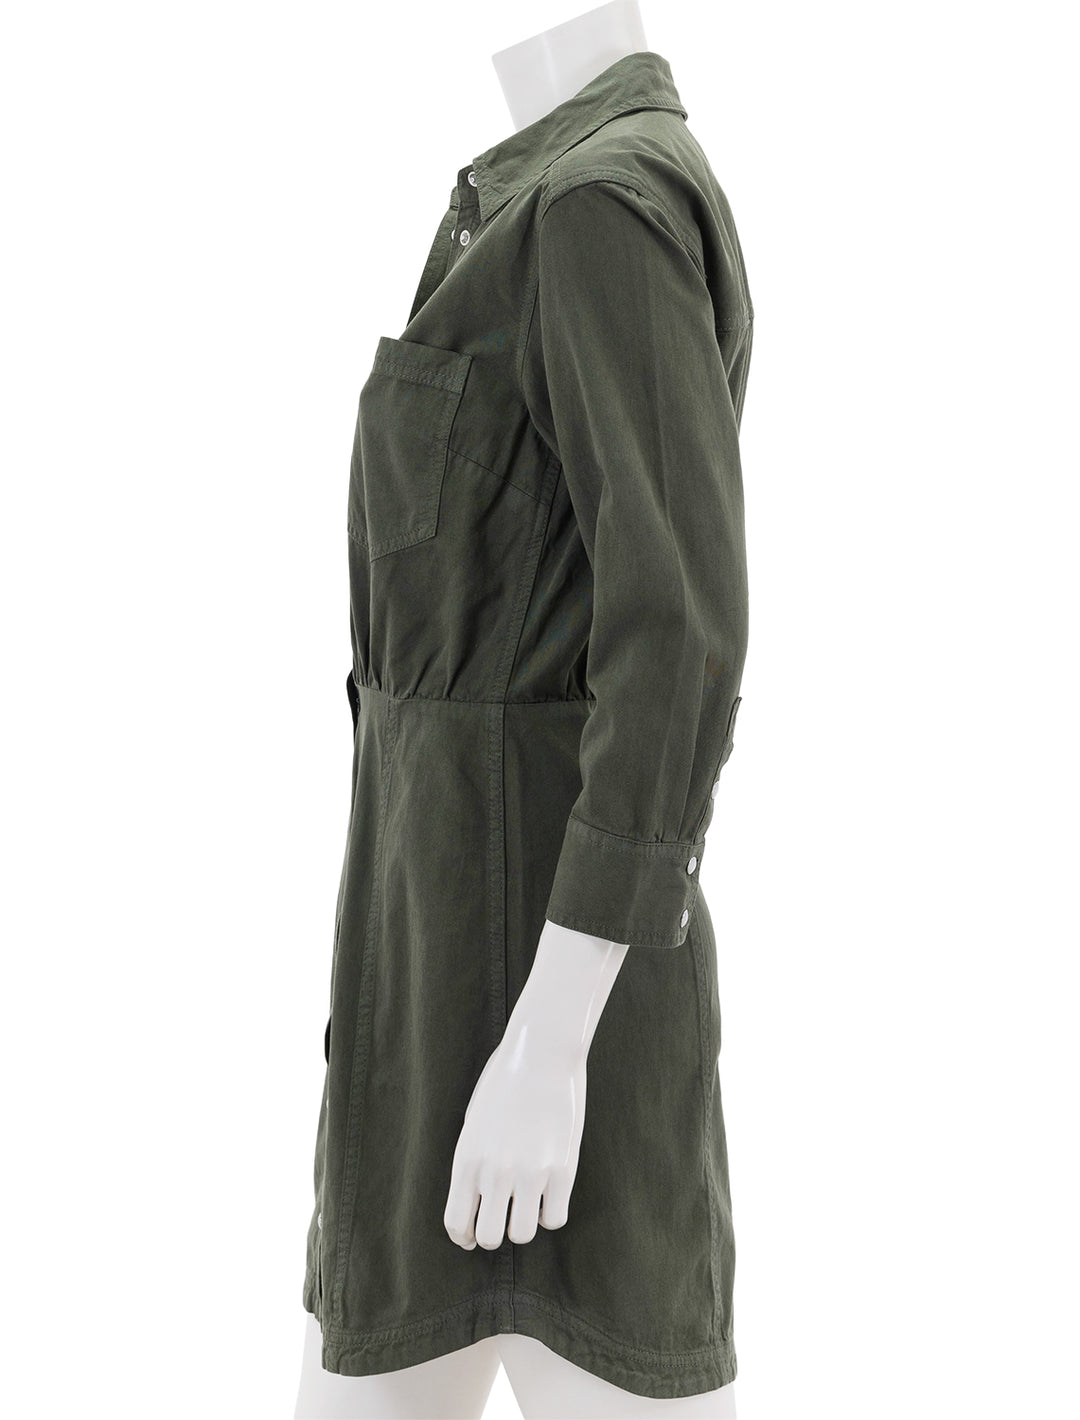 side view of keston dress in army green